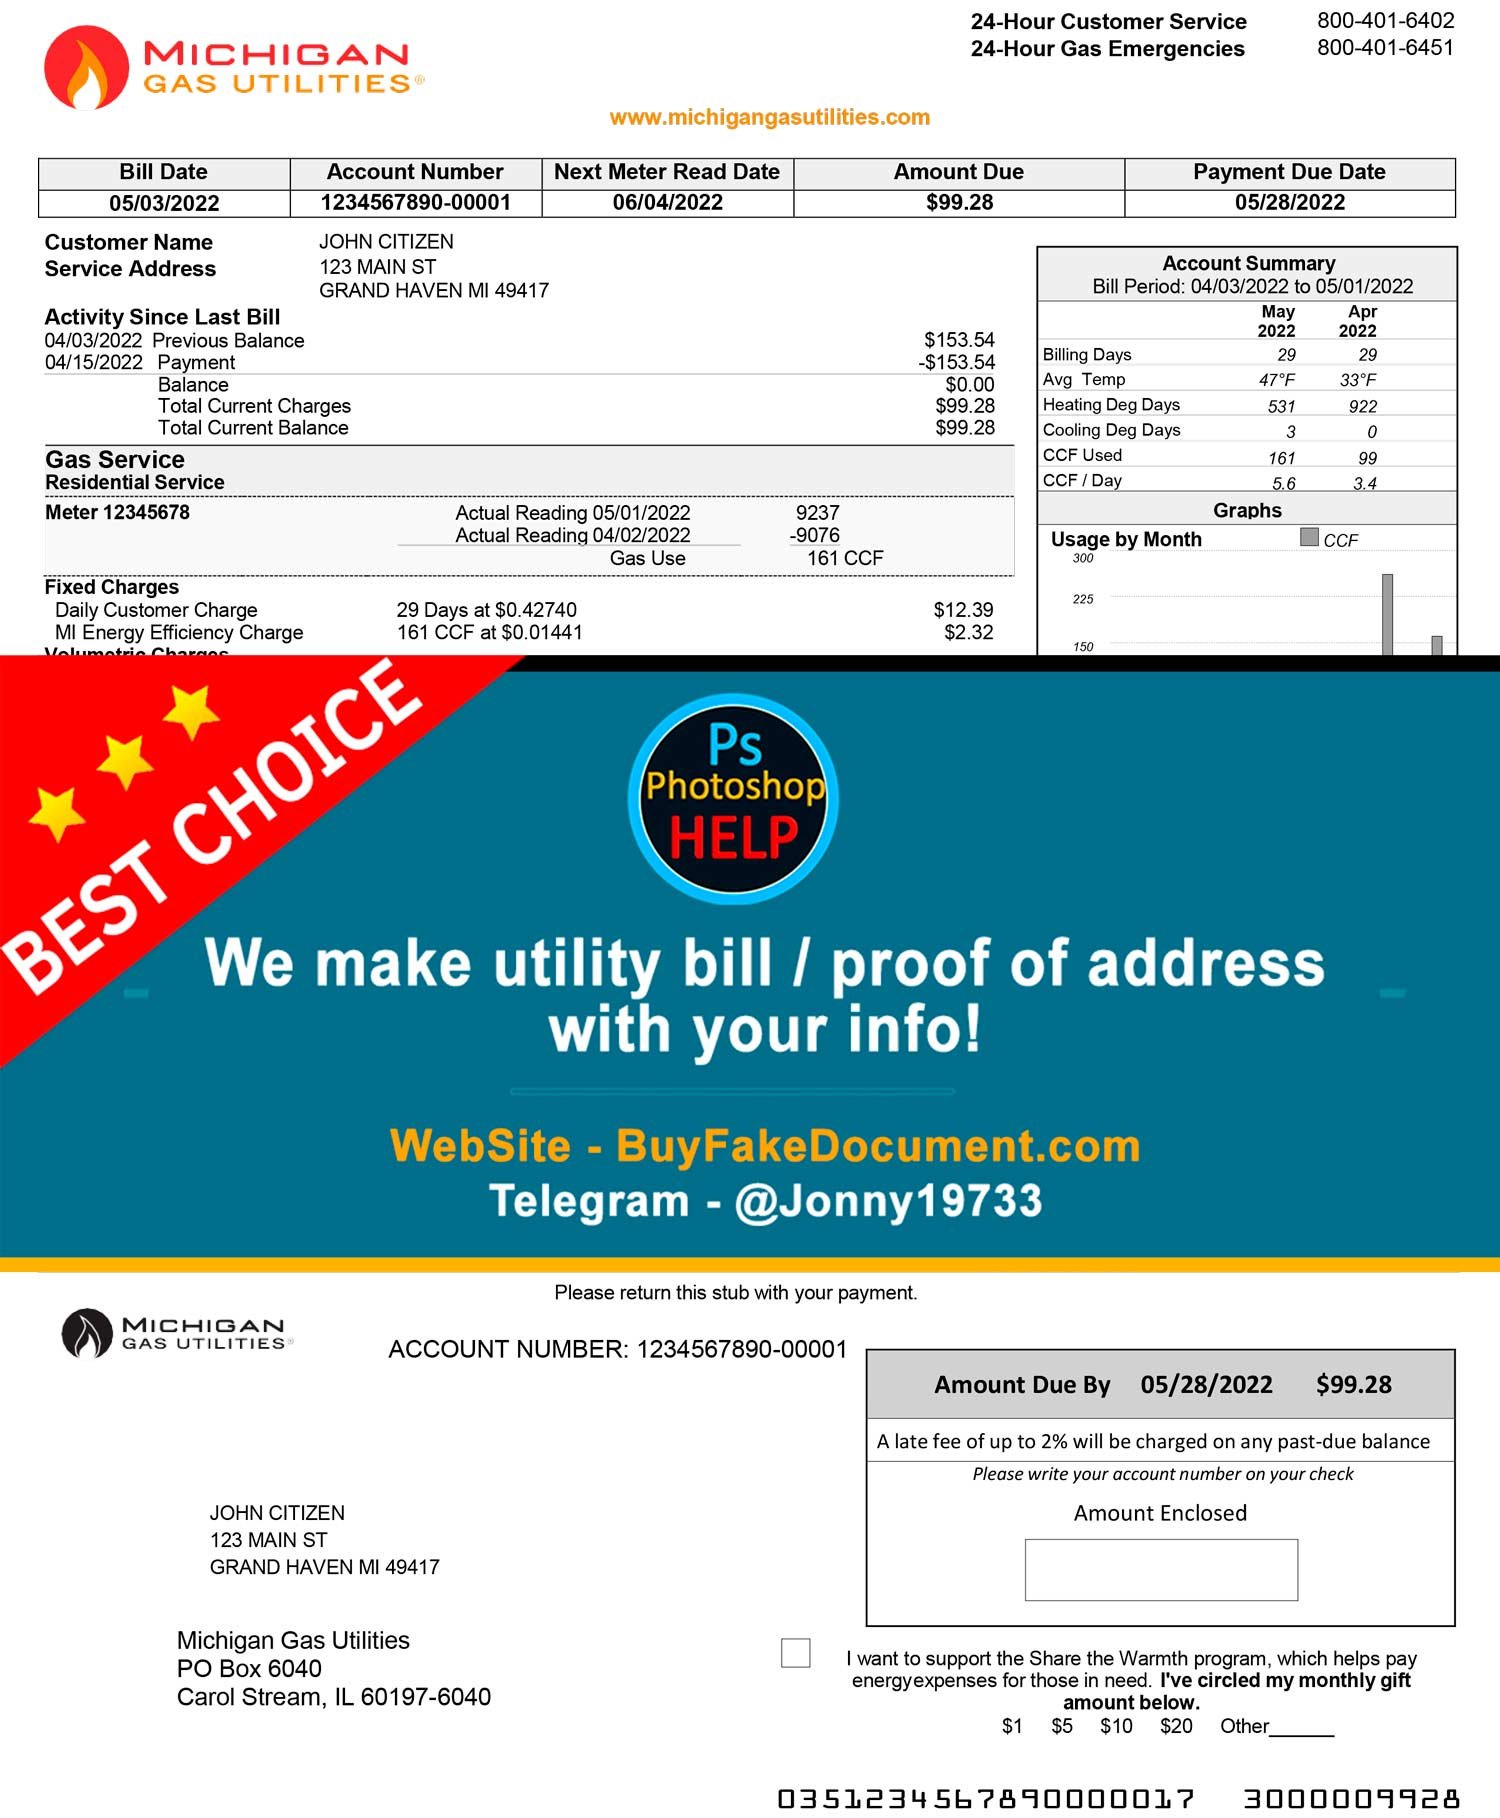 michigan-gas-utilities-utility-bill